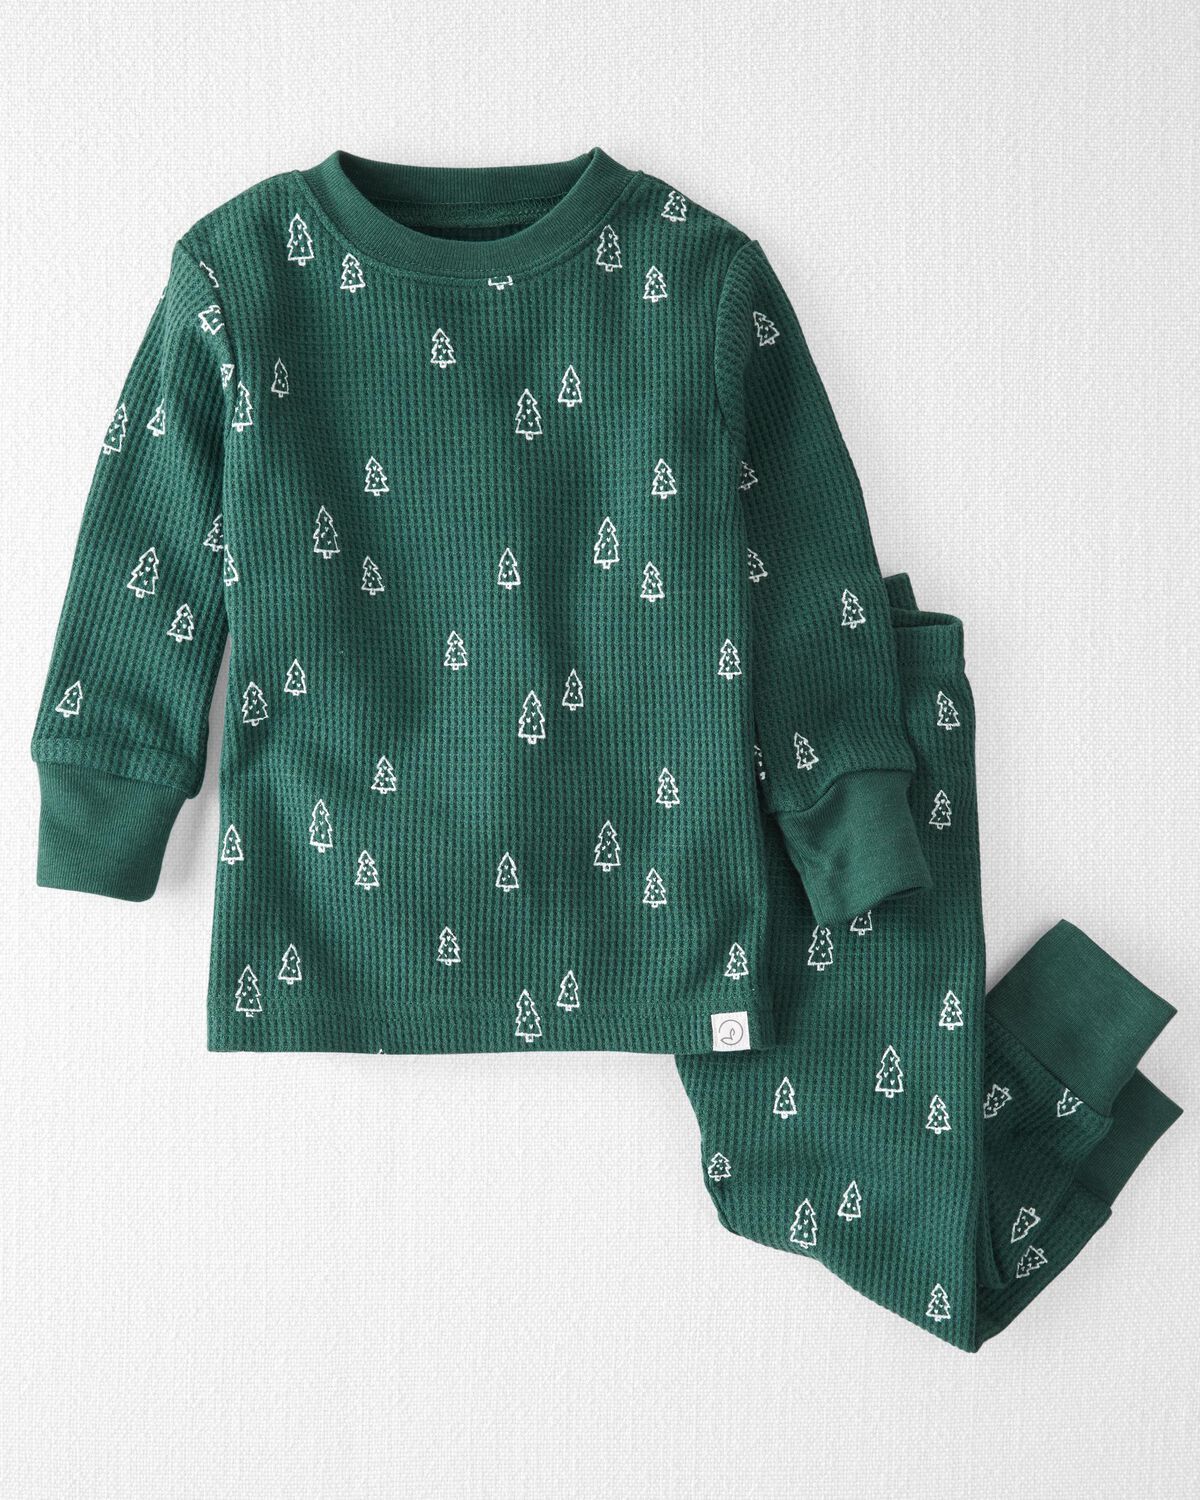 Evergreen Trees Print Baby Waffle Knit Pajamas Set Made with Organic Cotton | carters.com | Carter's